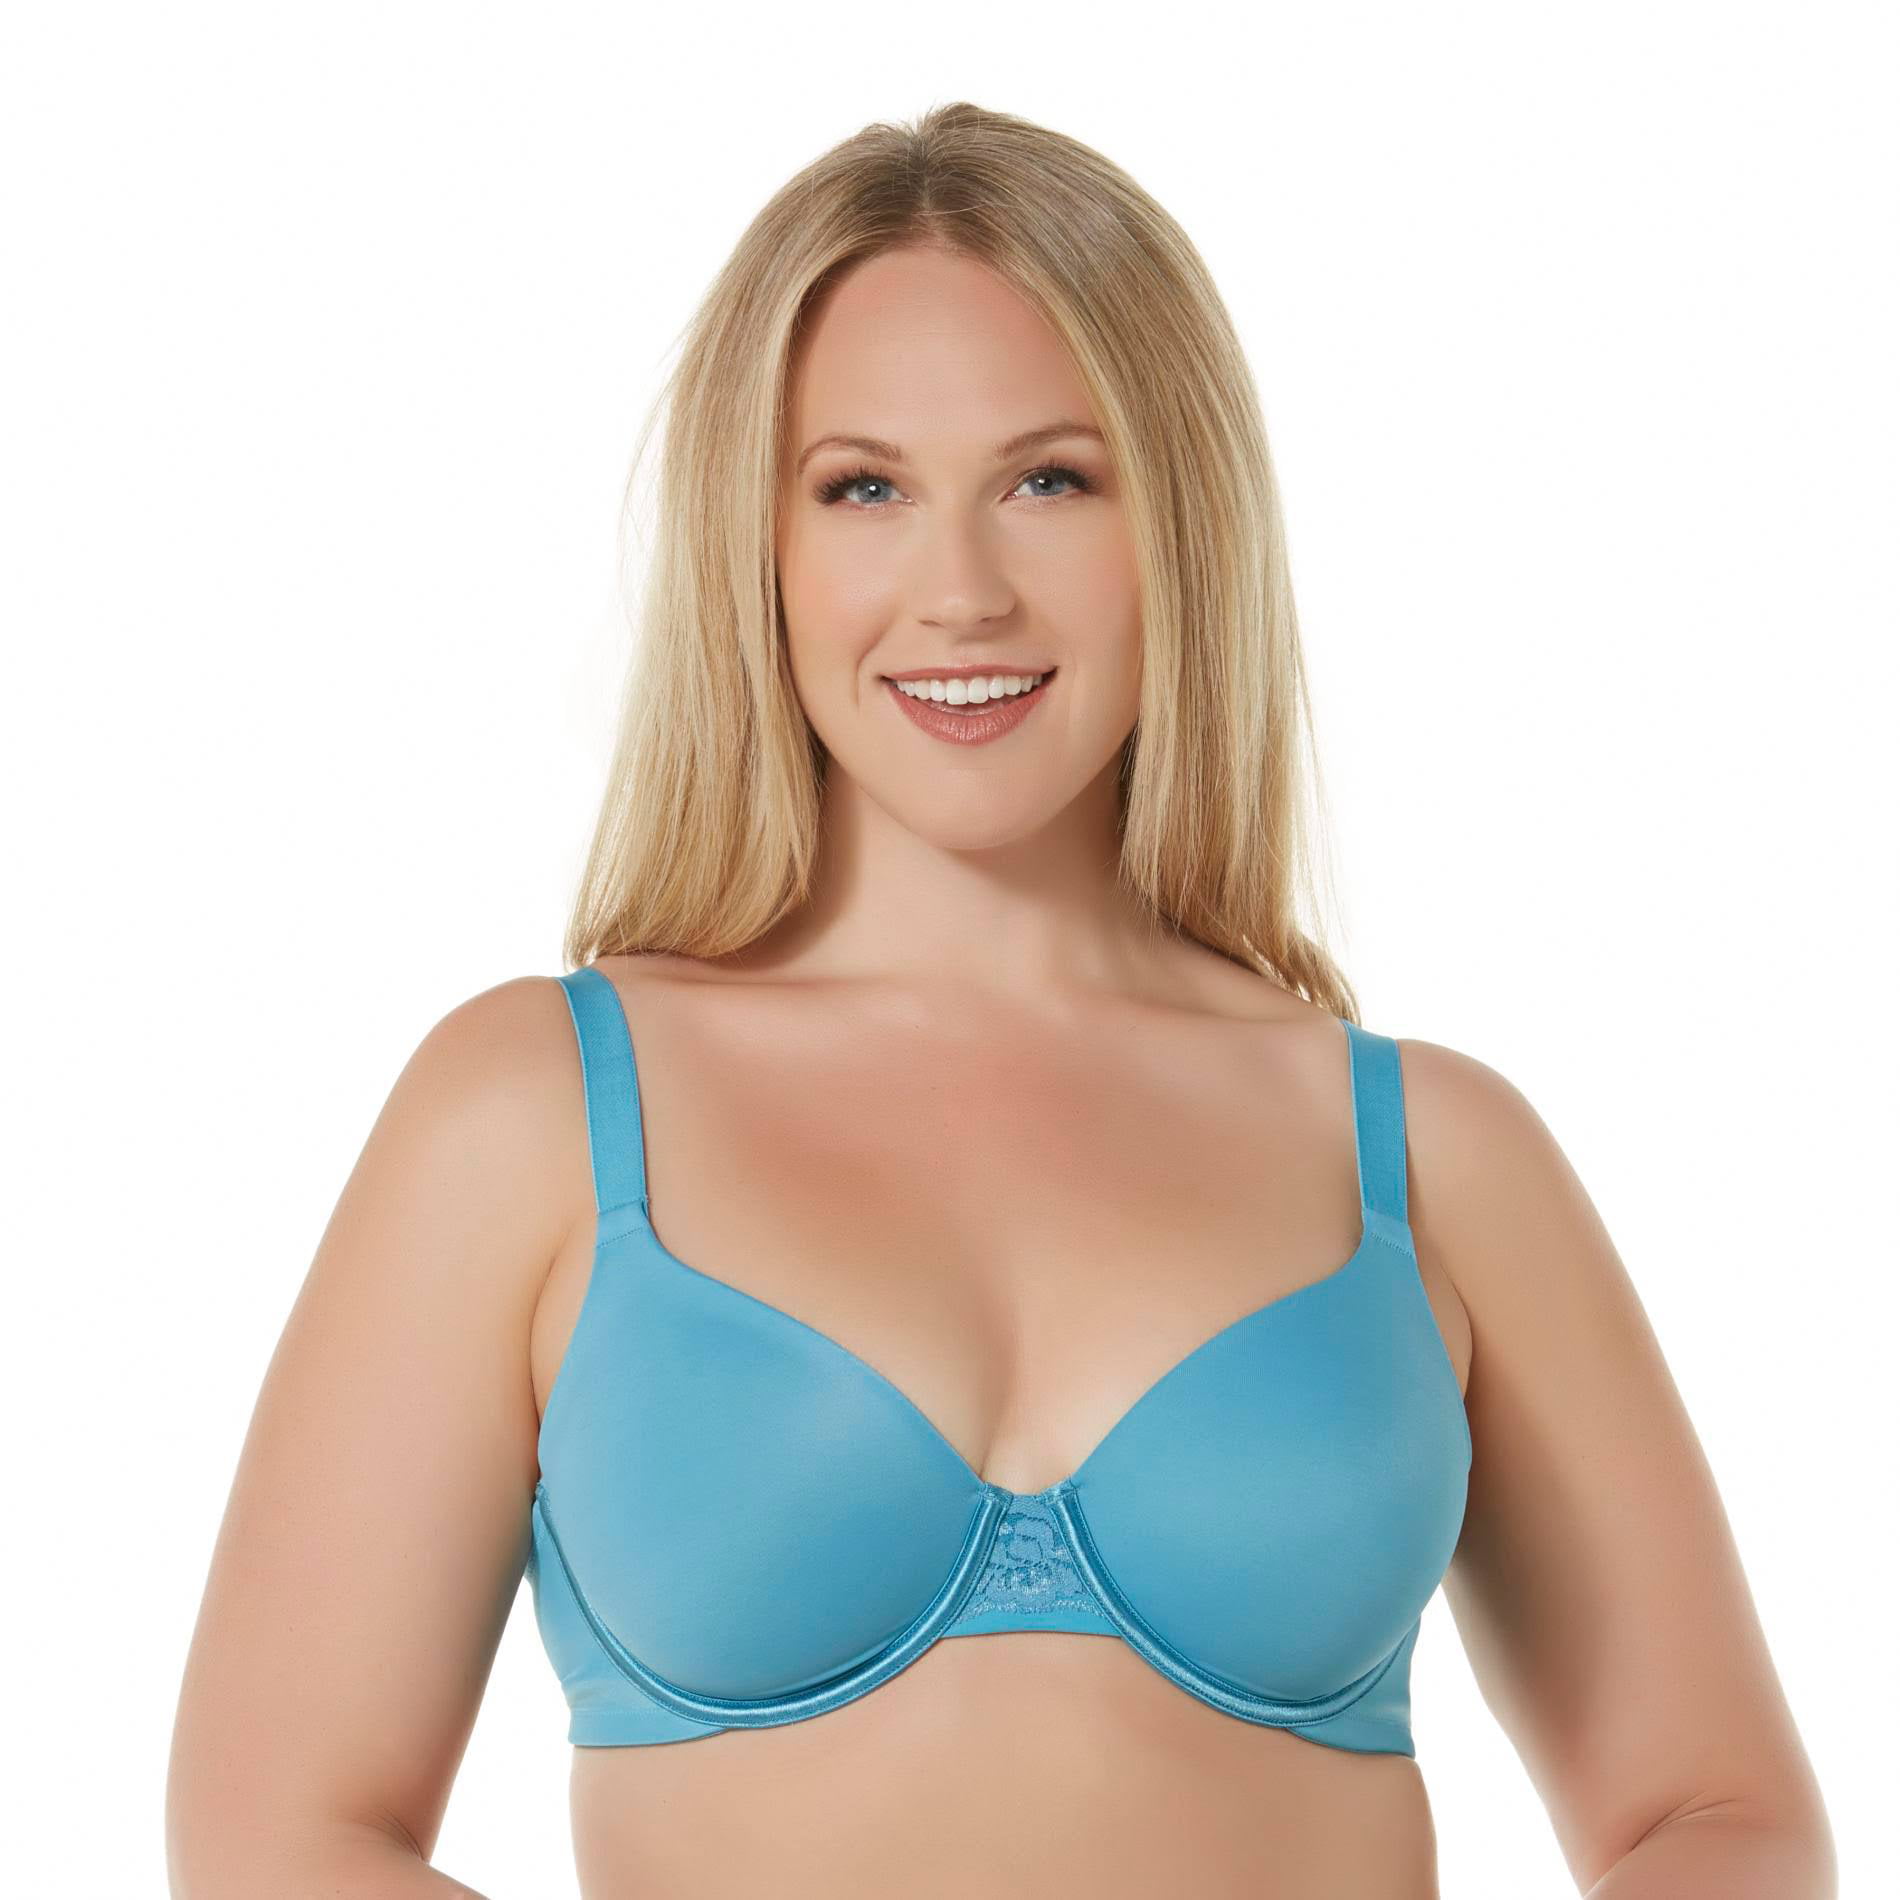 Curvation Women Adjustable Seamless bras - Walmart.com